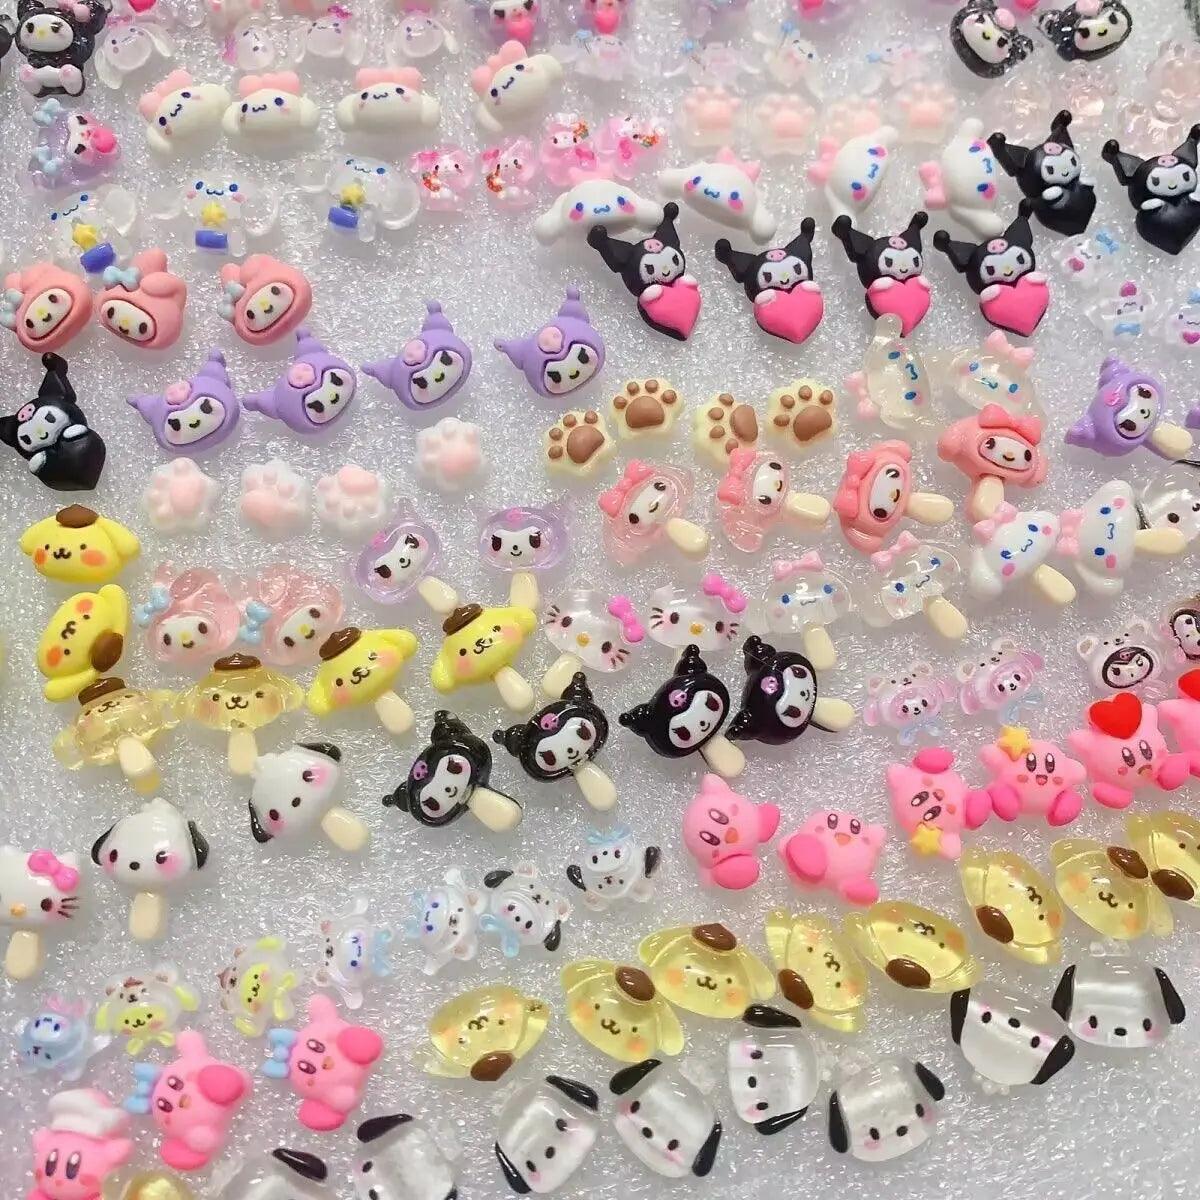 Whimsical Sanrio Nail Art Charm Kit with Hello Kitty and Kuromi Gems  ourlum.com   